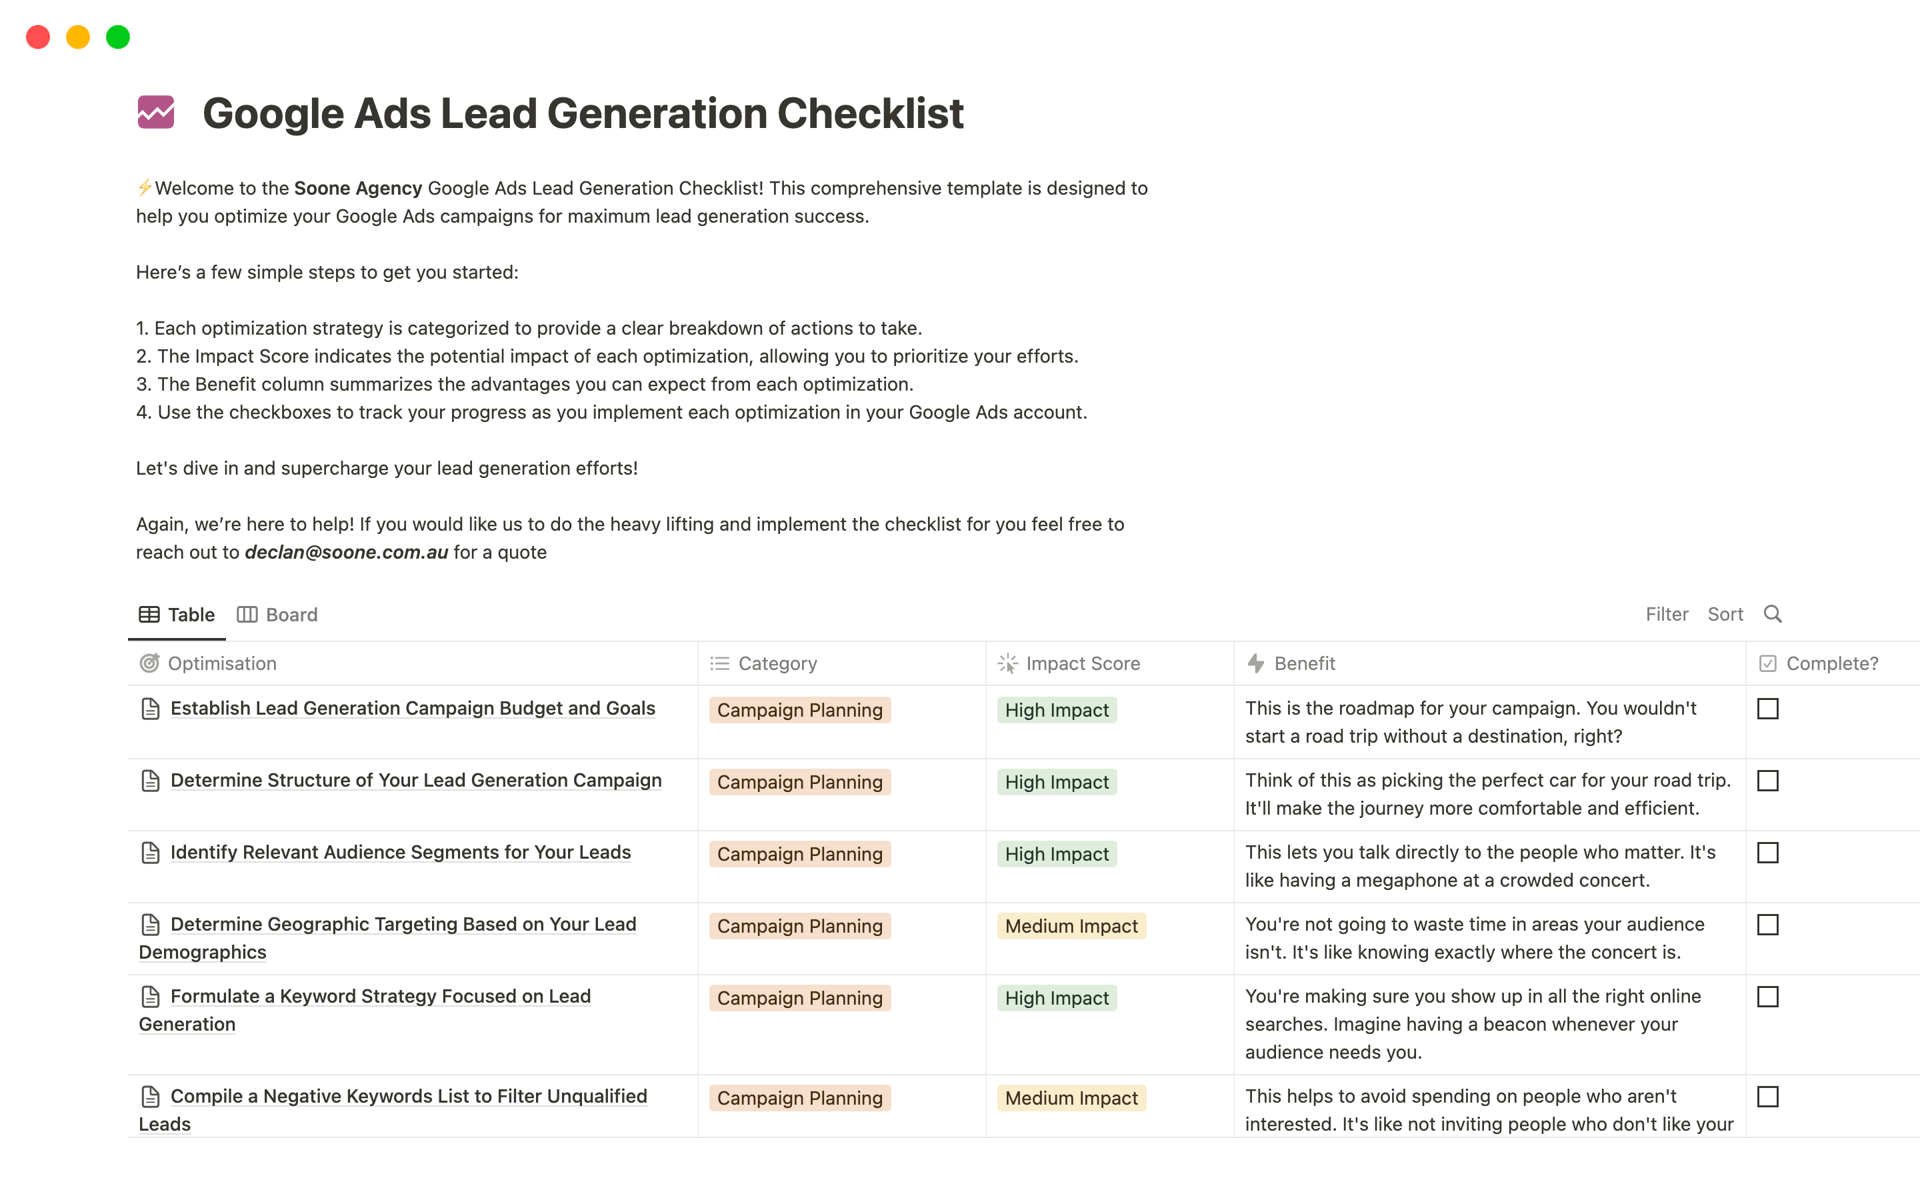 50+ Point Google Ads Lead Generation Notion Checklist

